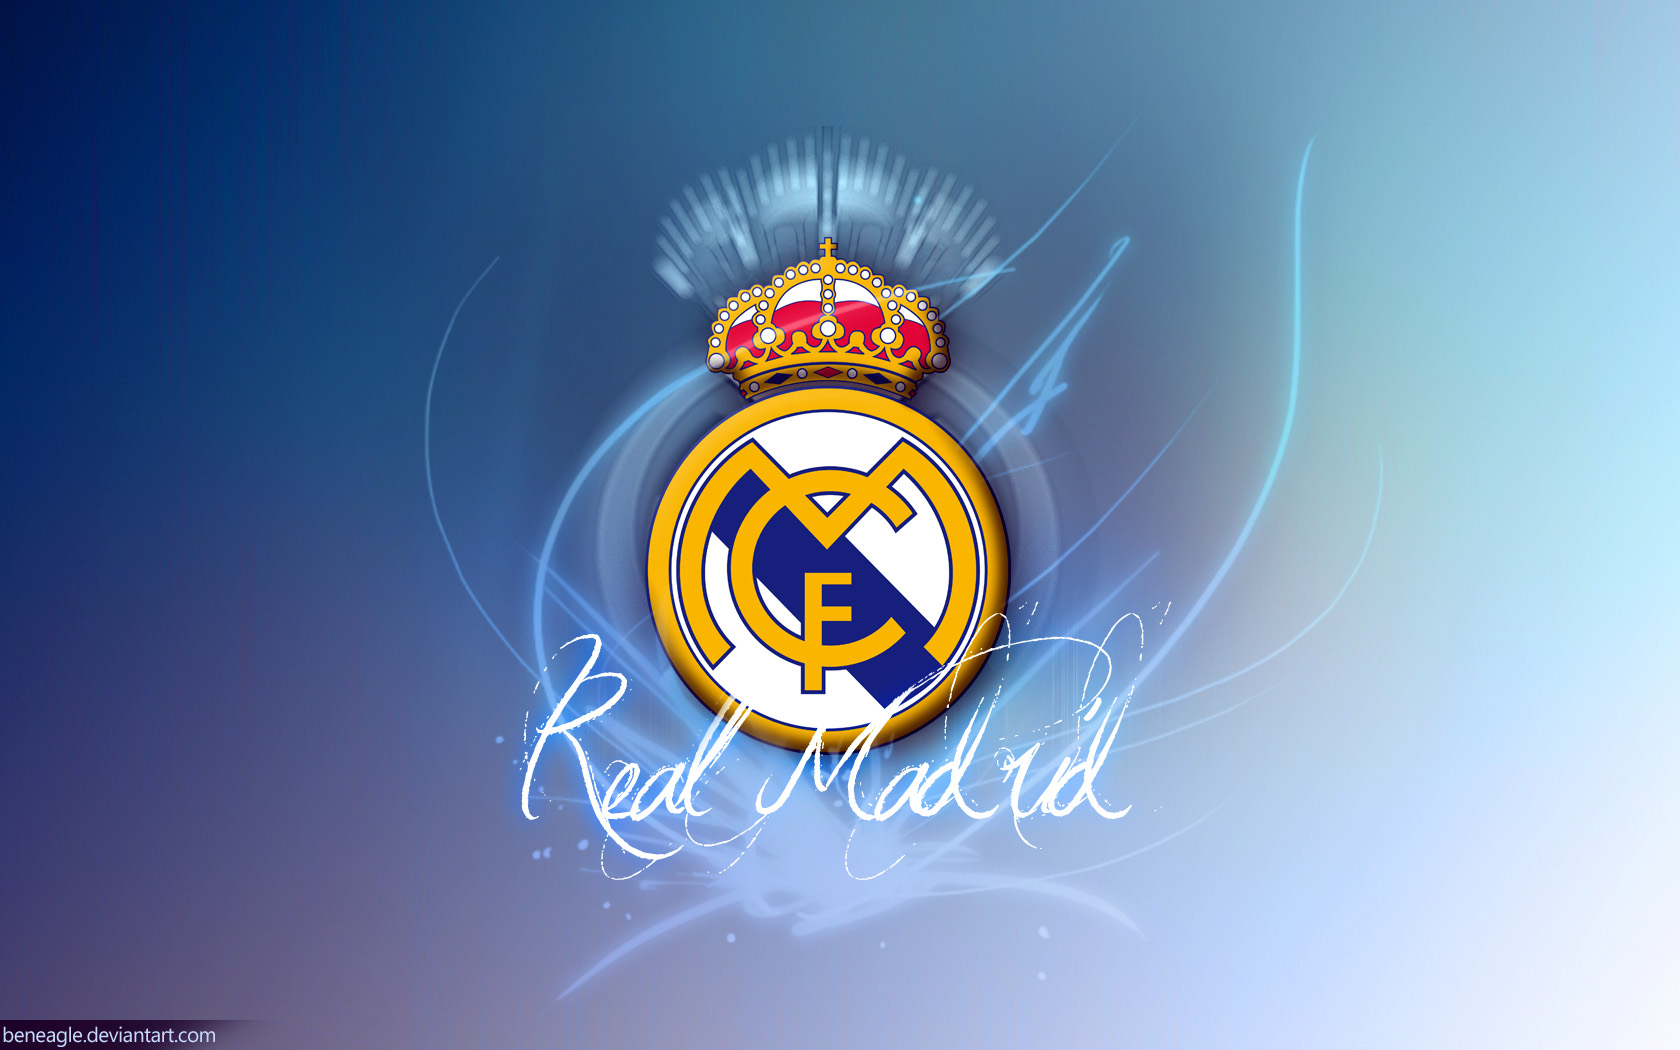 Real Madrid Image Wallpaper